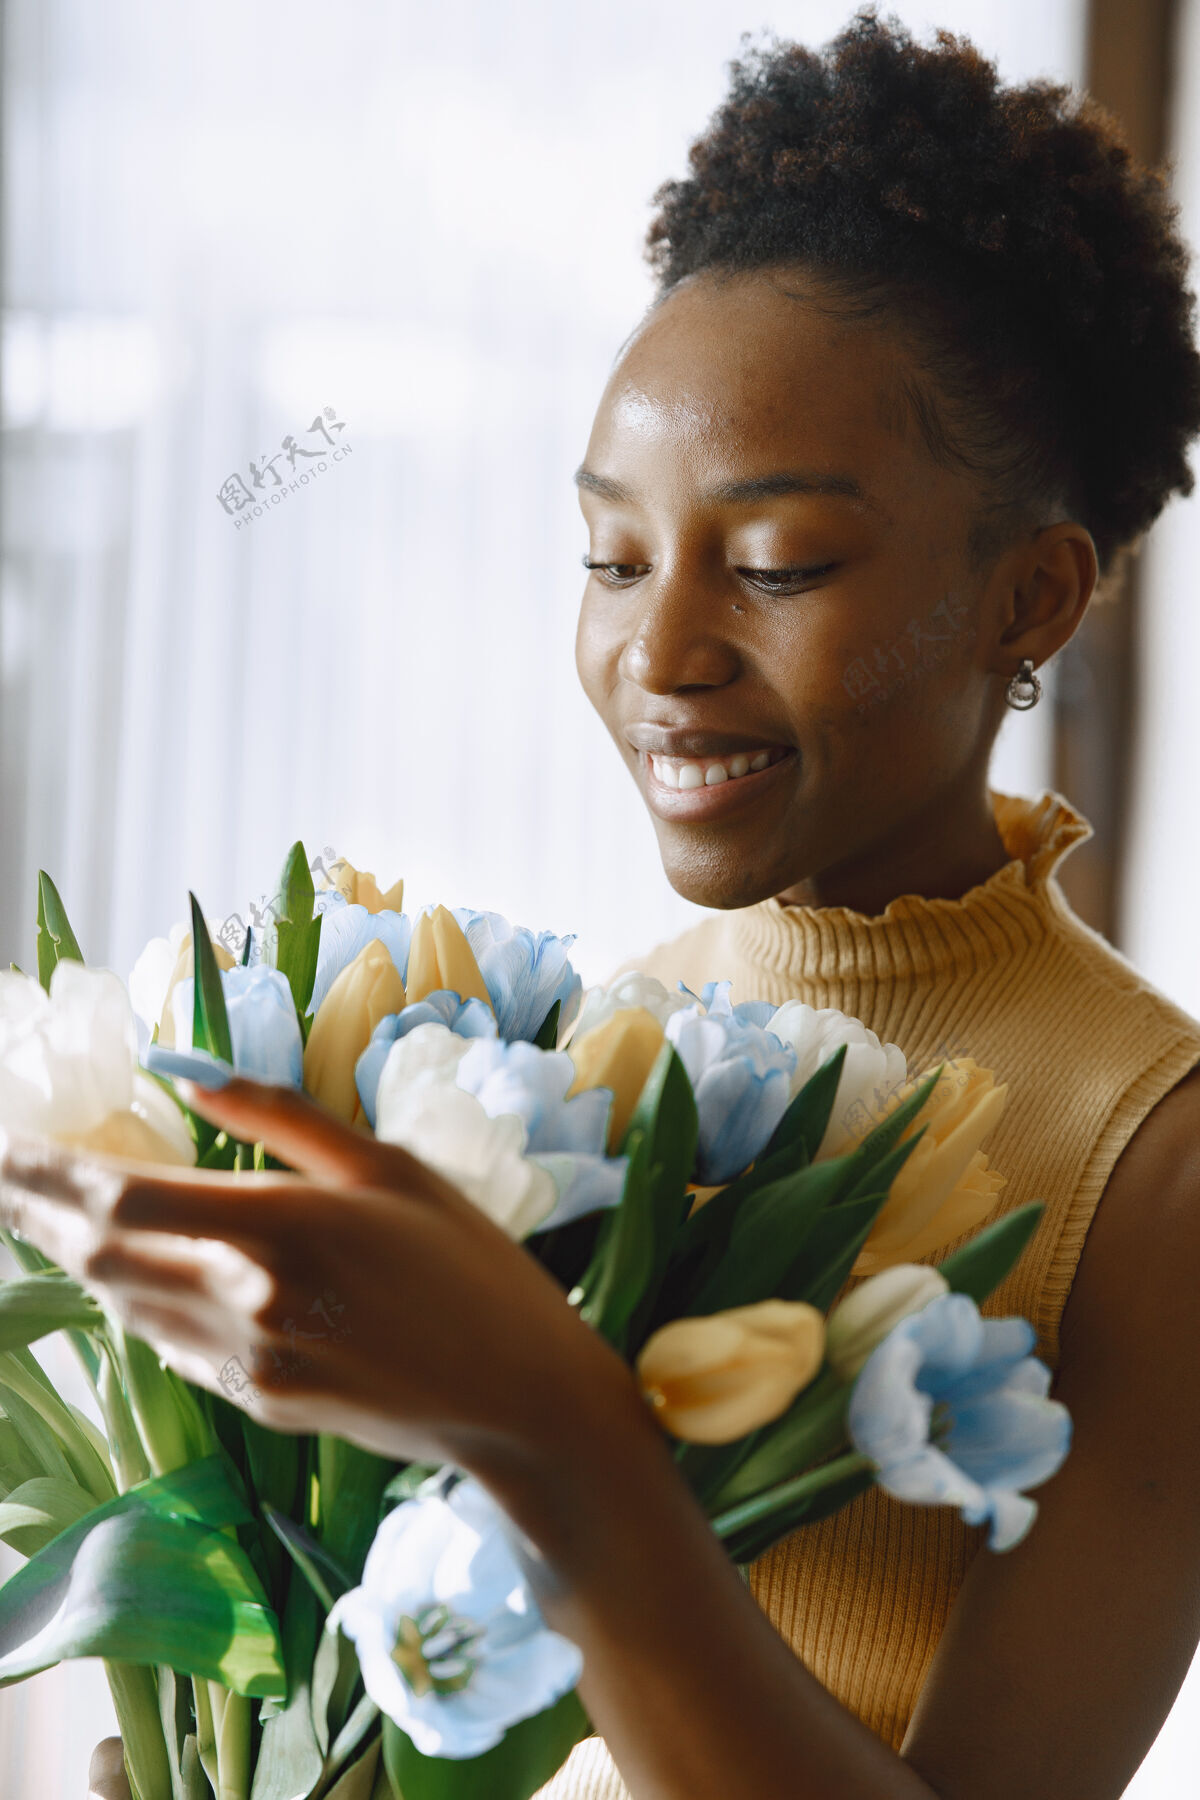 Alstroemeria开着花的非洲女孩手里拿着一束郁金香窗边的女人年轻积极女人